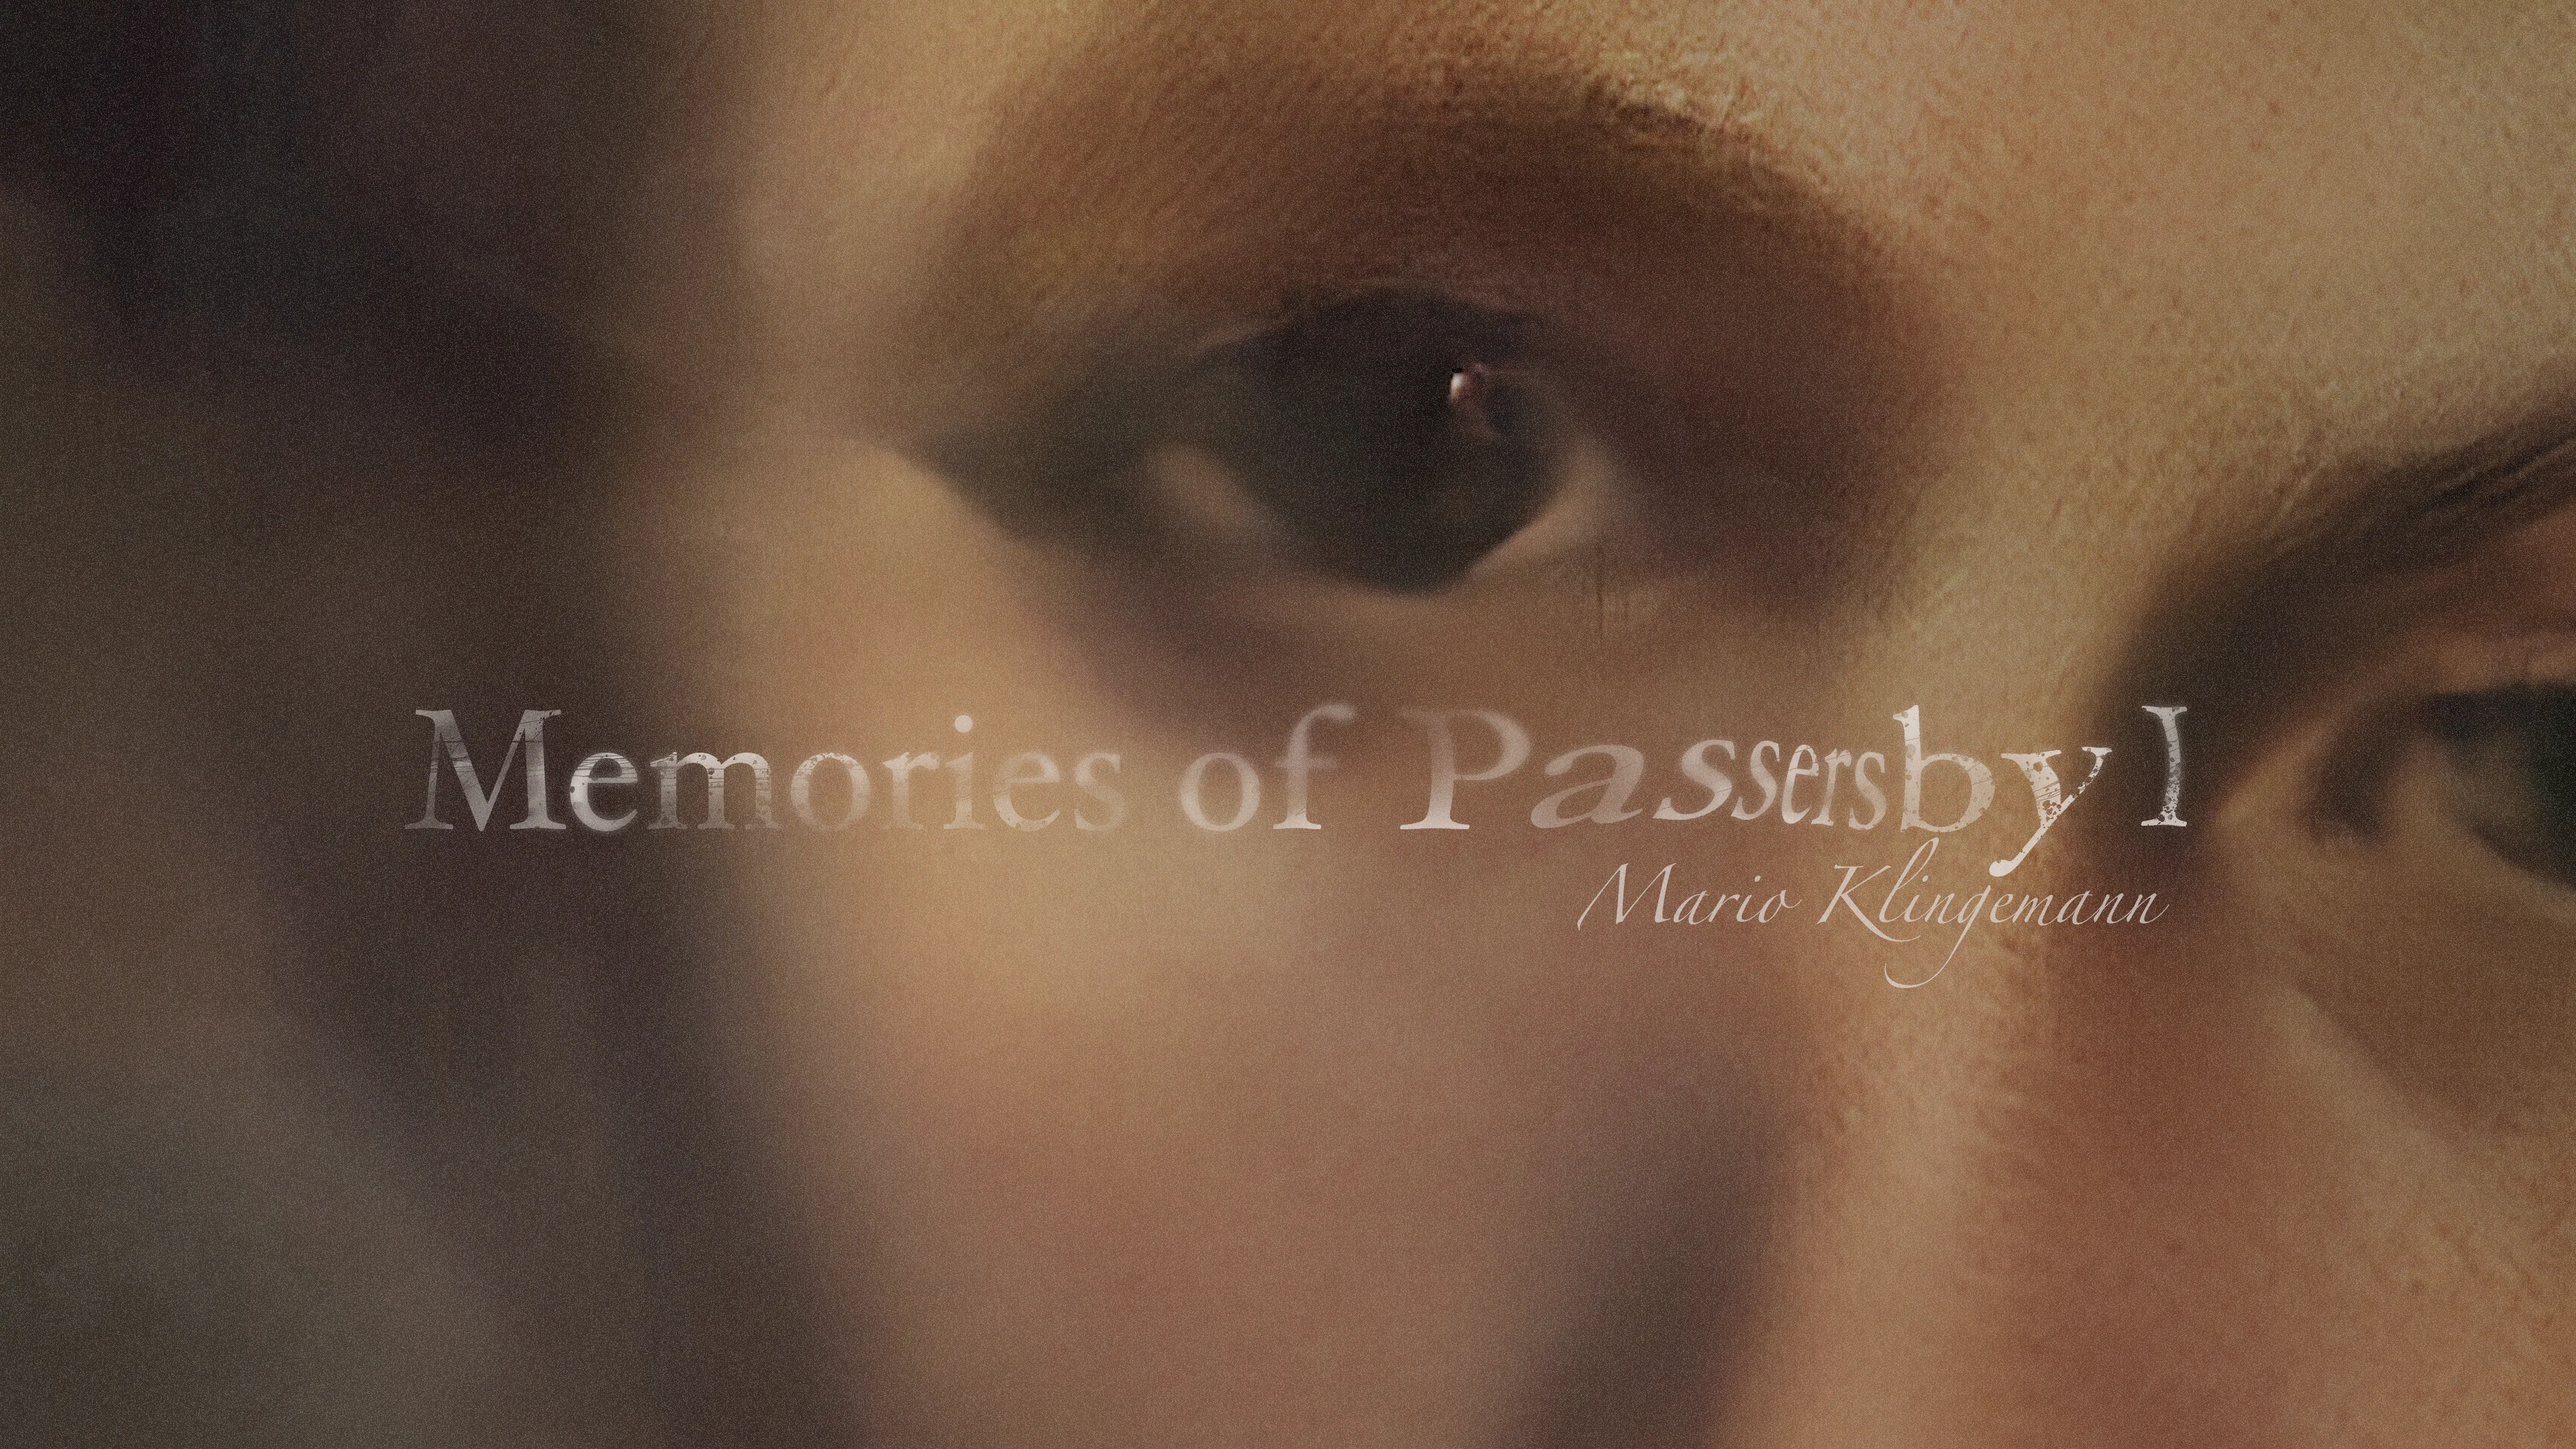 Memories of Passersby I by Mario Klingemann